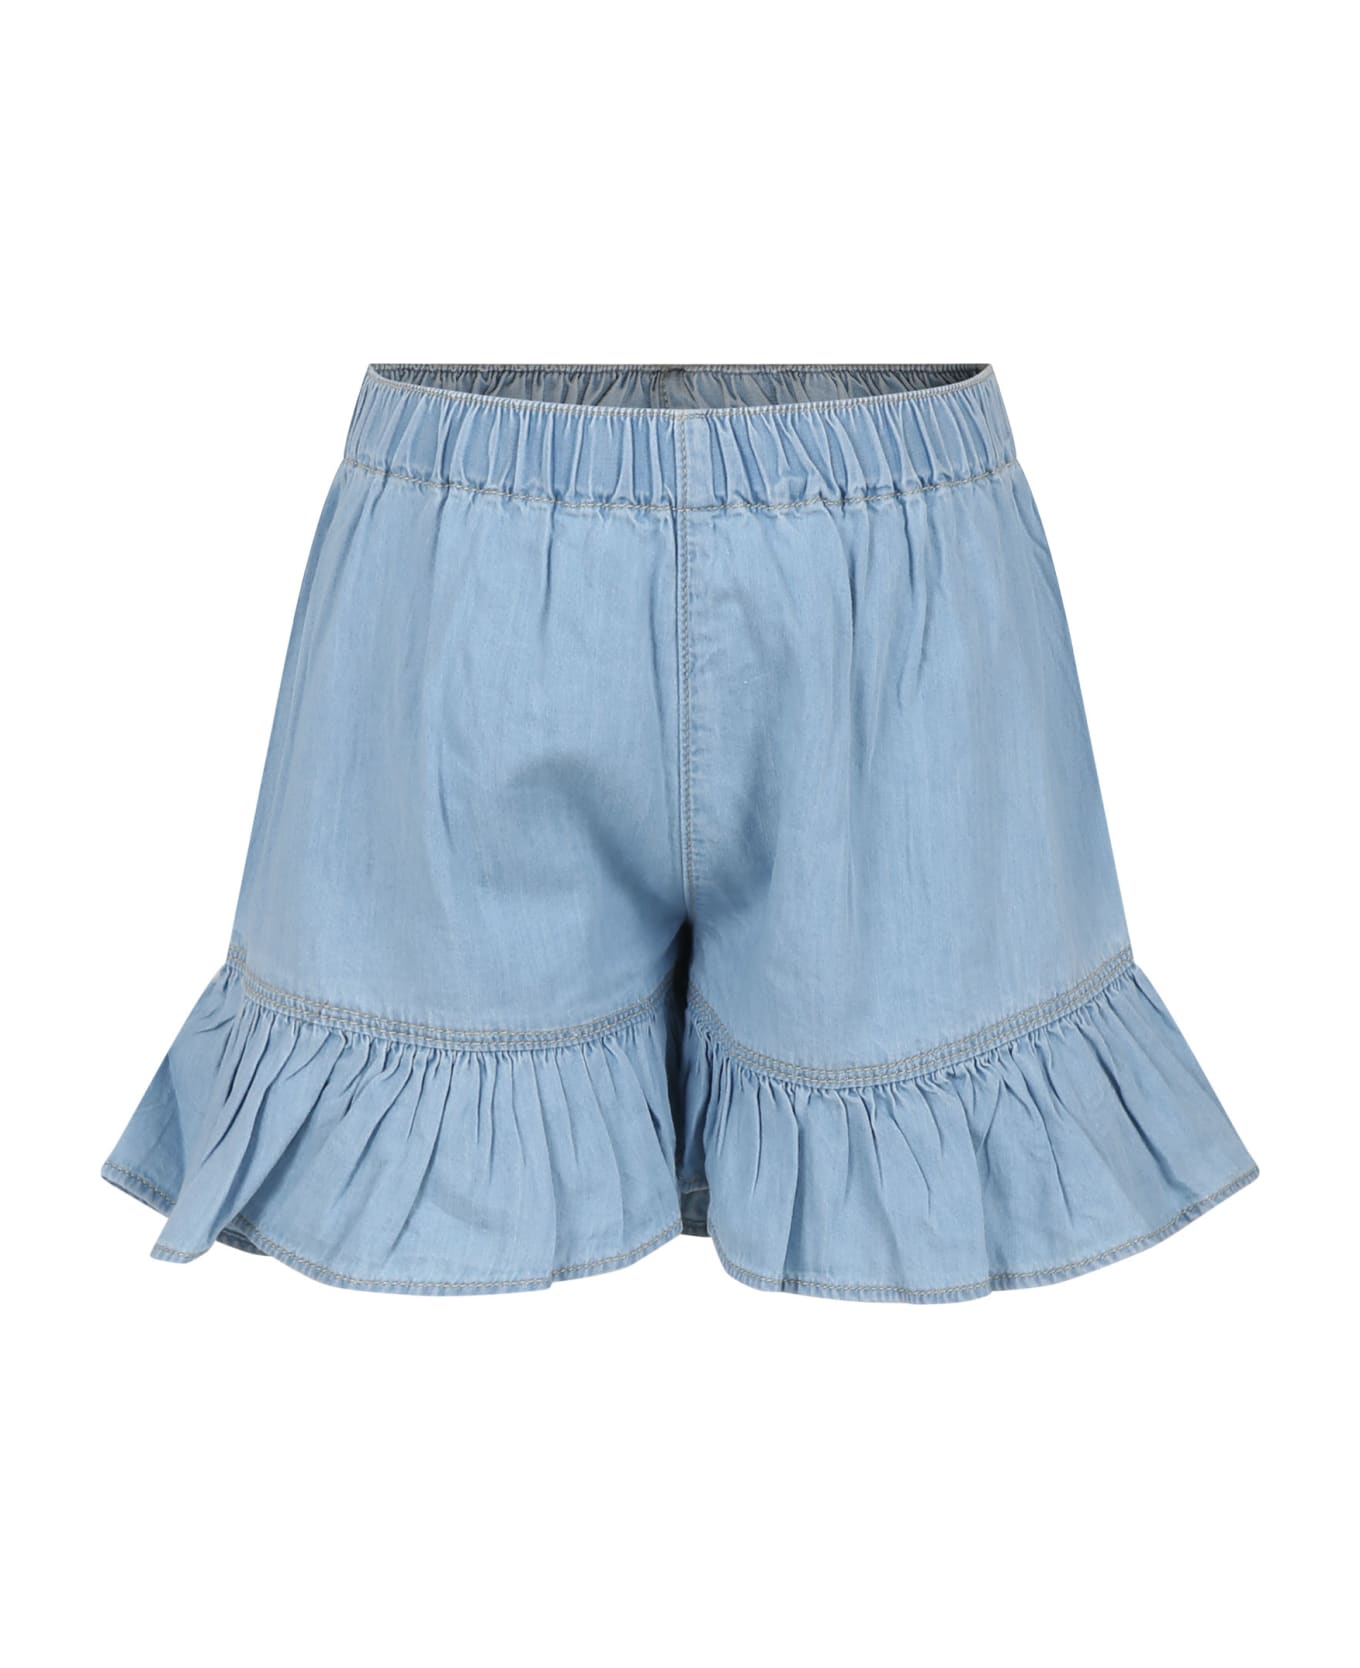 Molo Blue Shorts For Girl - Denim ボトムス